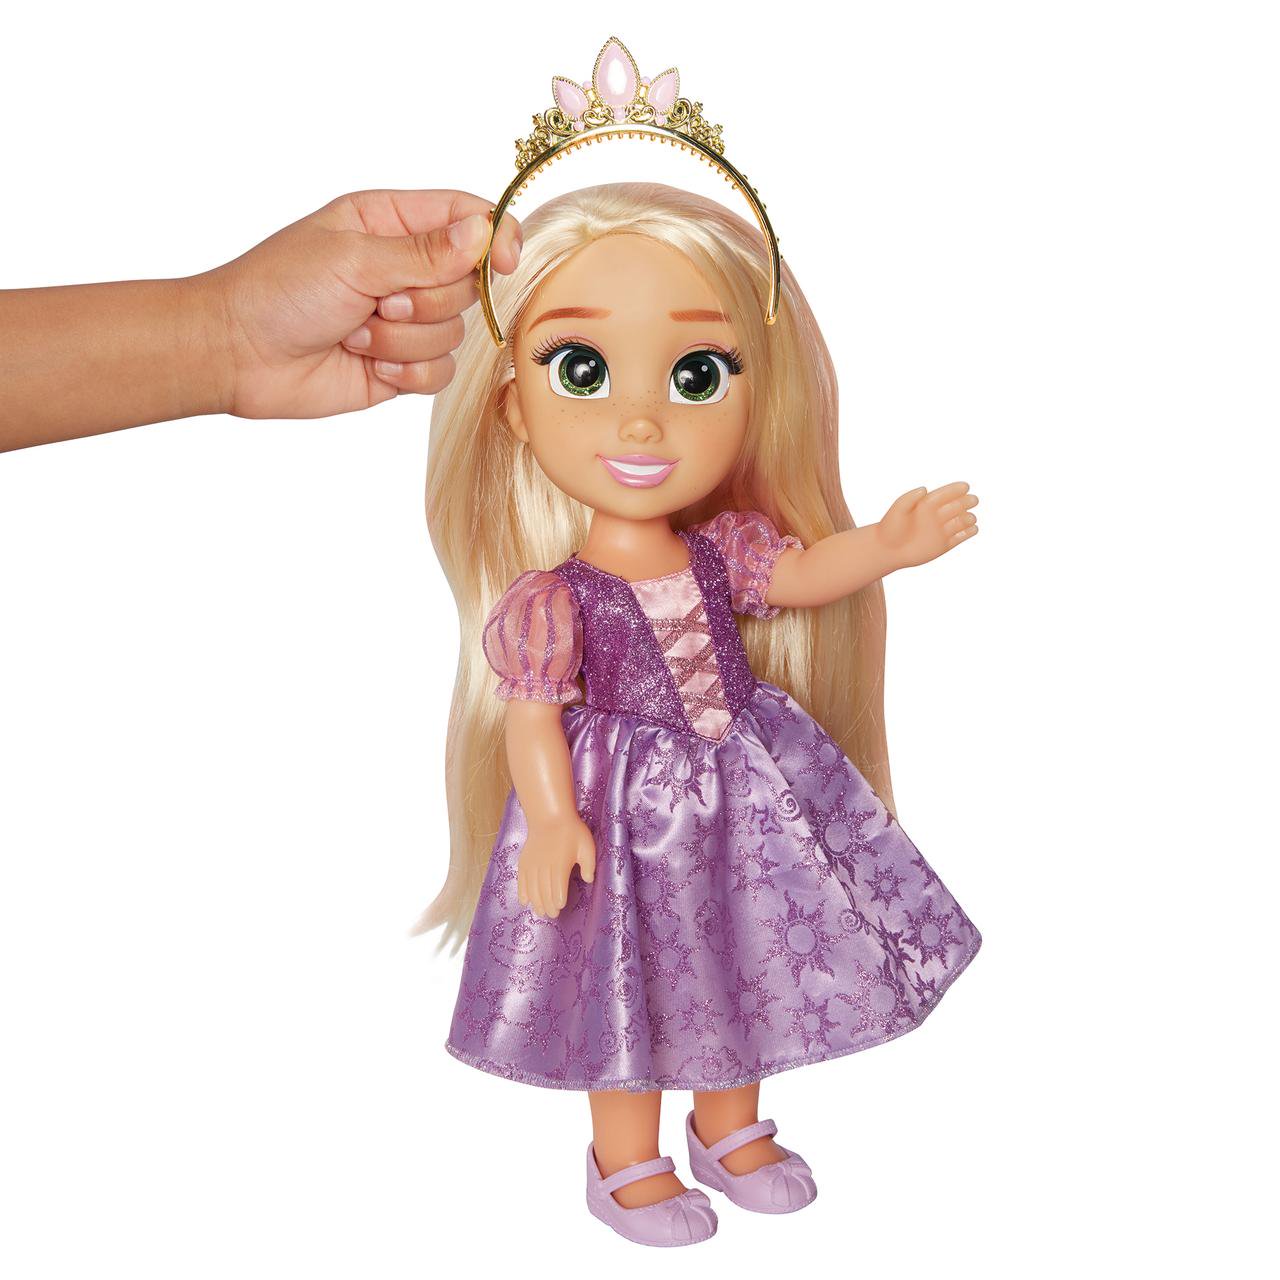 14" Disney Princess My Friend Rapunzel Doll w/ Removable Outfit & Tiara $9.88 + FS w/ Walmart+ or FS on $35+